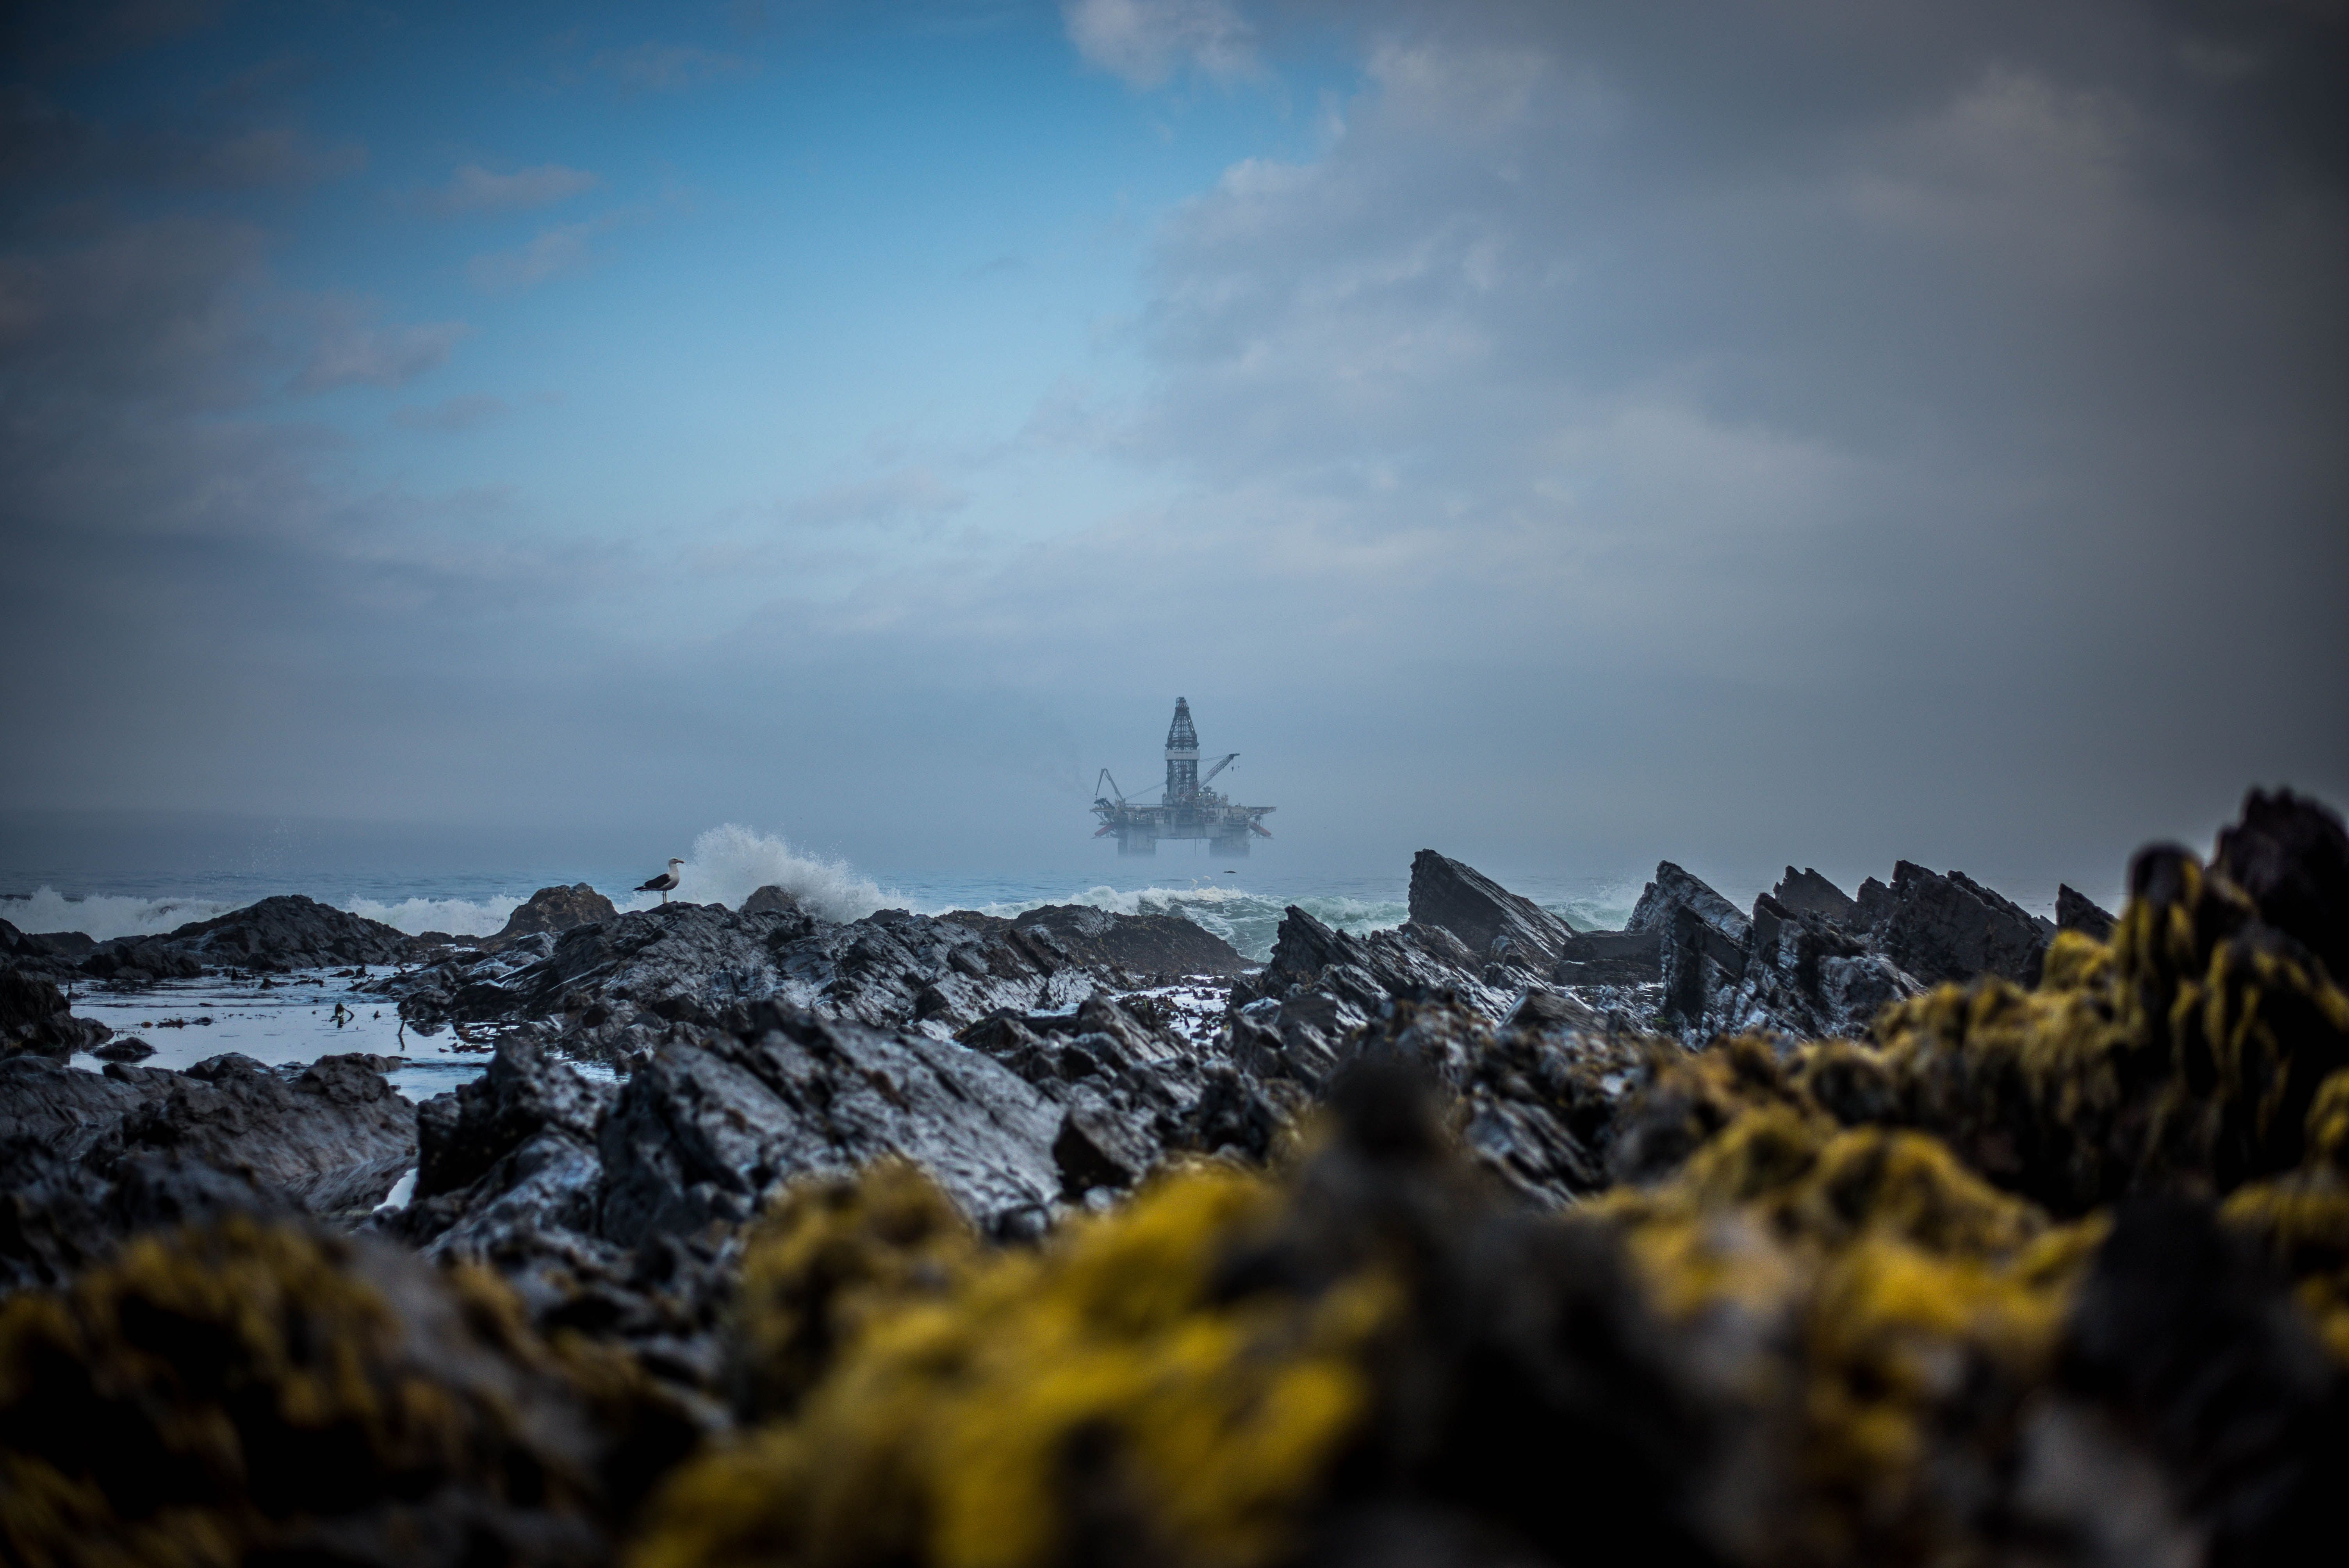 oil rig platform offshore.jpg